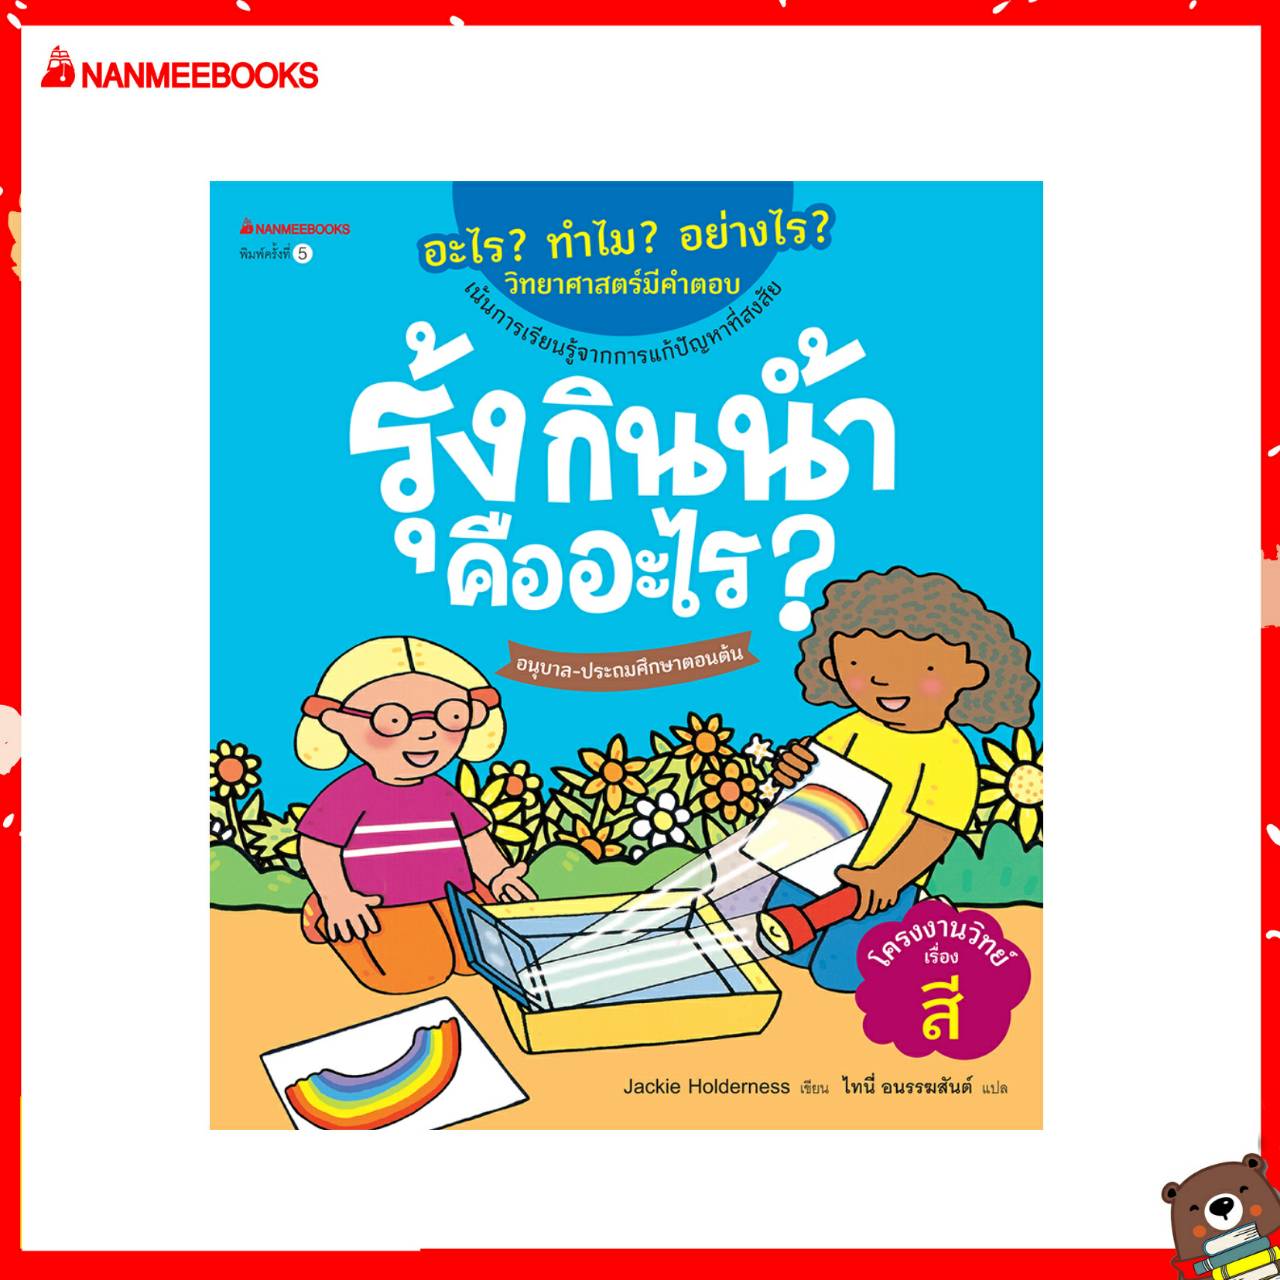 Nanmeebooks หนังสือ รุ้งกินน้ำคืออะไร (ปกใหม่) :ชุด อะไร? ทำไม? อย่างไร? วิทยาศาสตร์มีคำตอบ ; นิทาน เด็ก